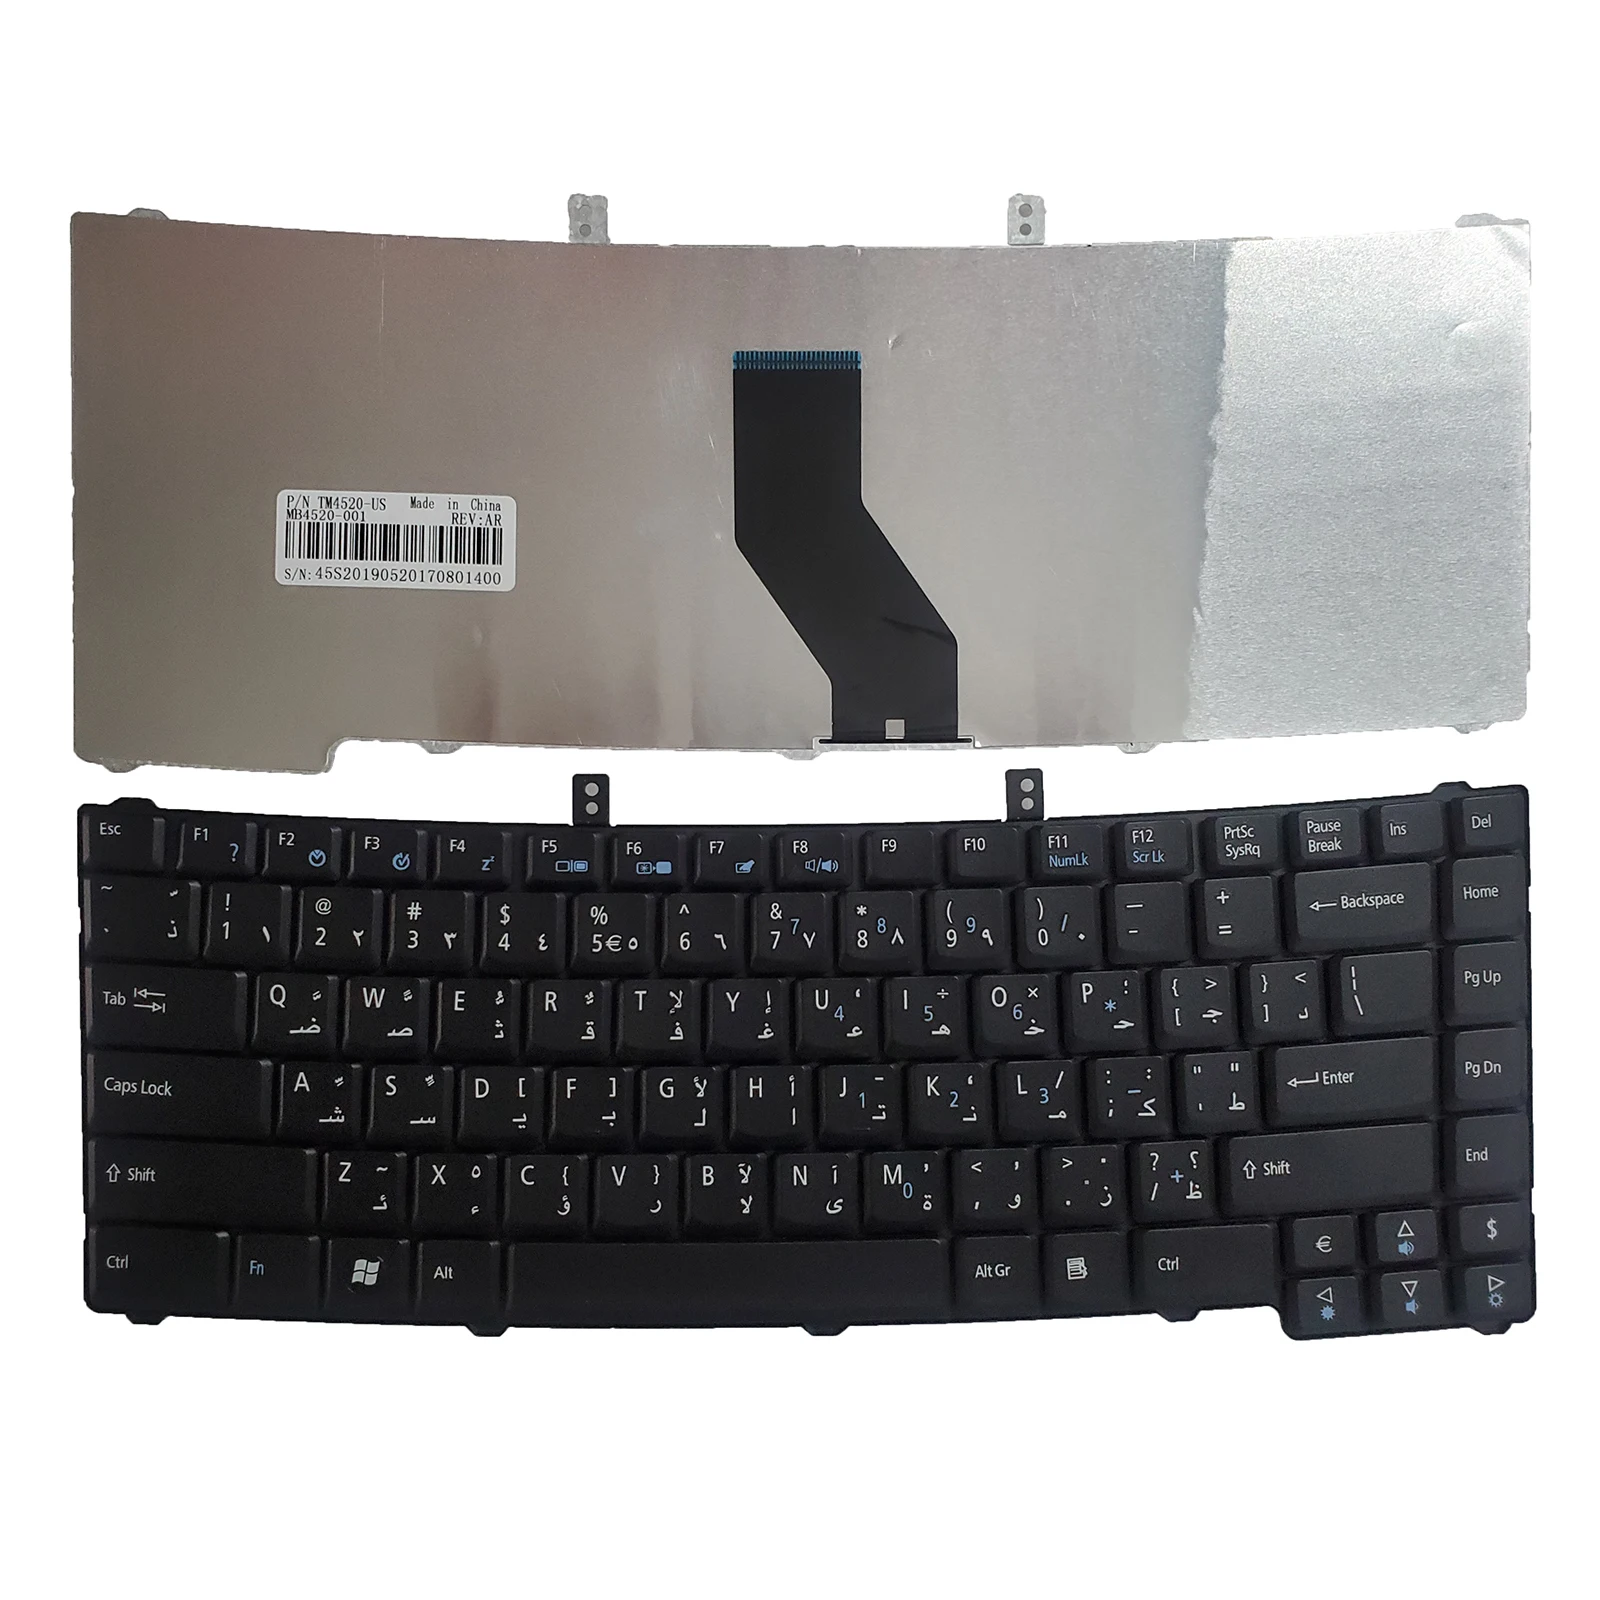 AR клавиатура для Acer TravelMate TM4520 TM4320 TM5710 TM4720 TM4730